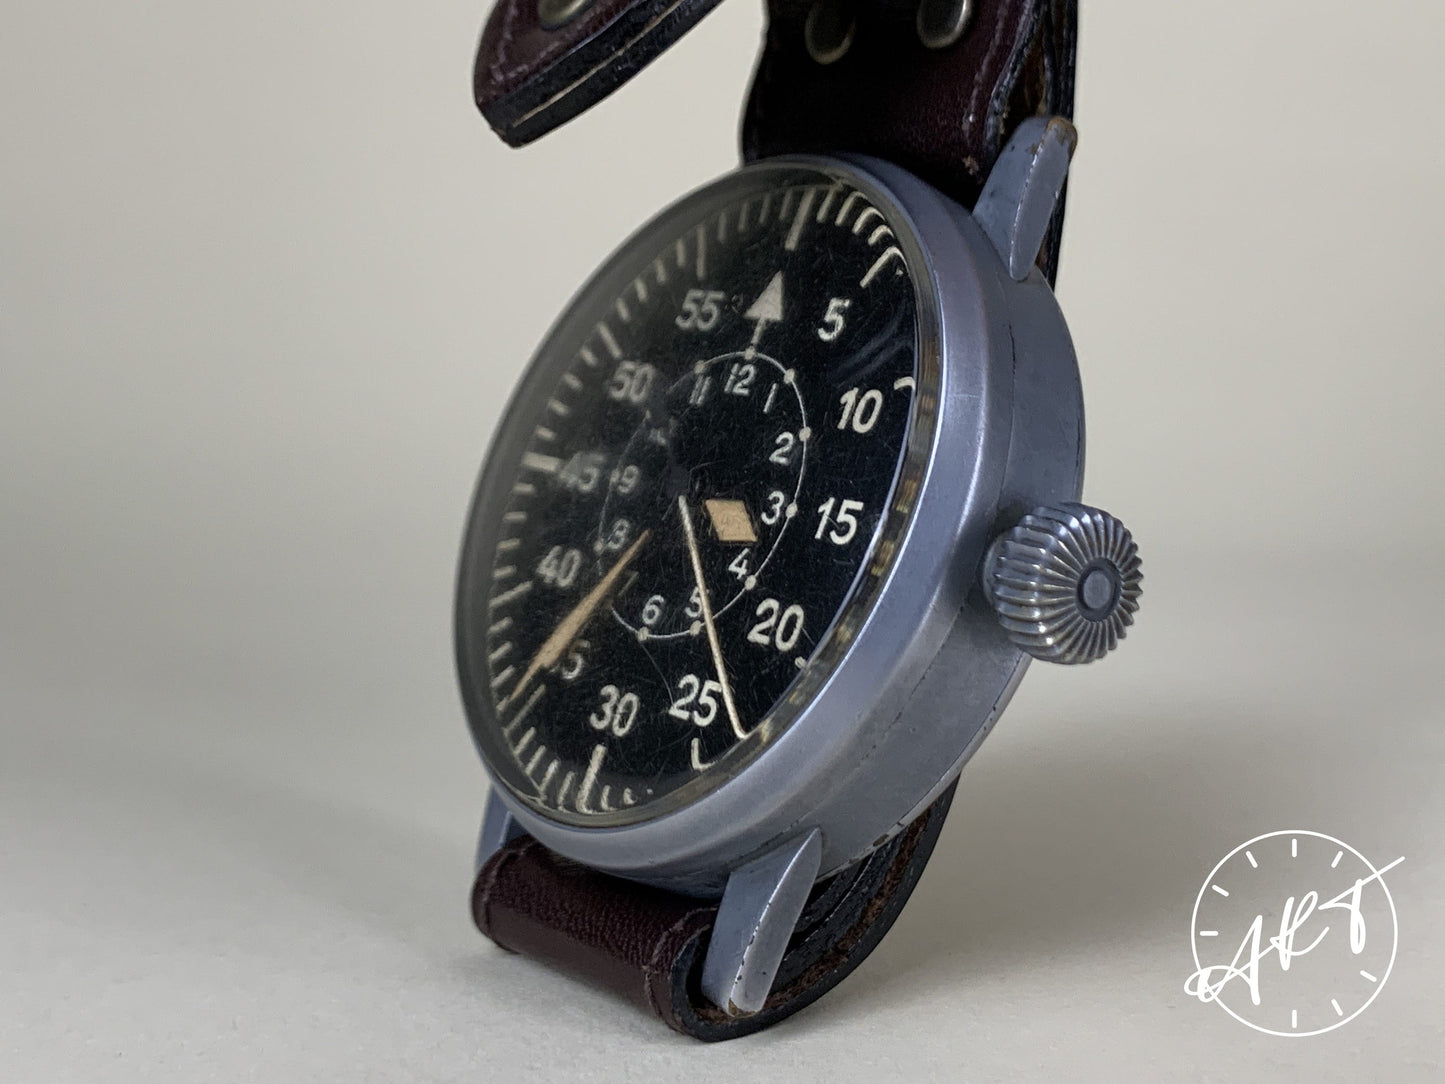 Vintage 1940s Laco B-UHR Black Dial Steel WW2 Luftwaffe Pilot Military Watch